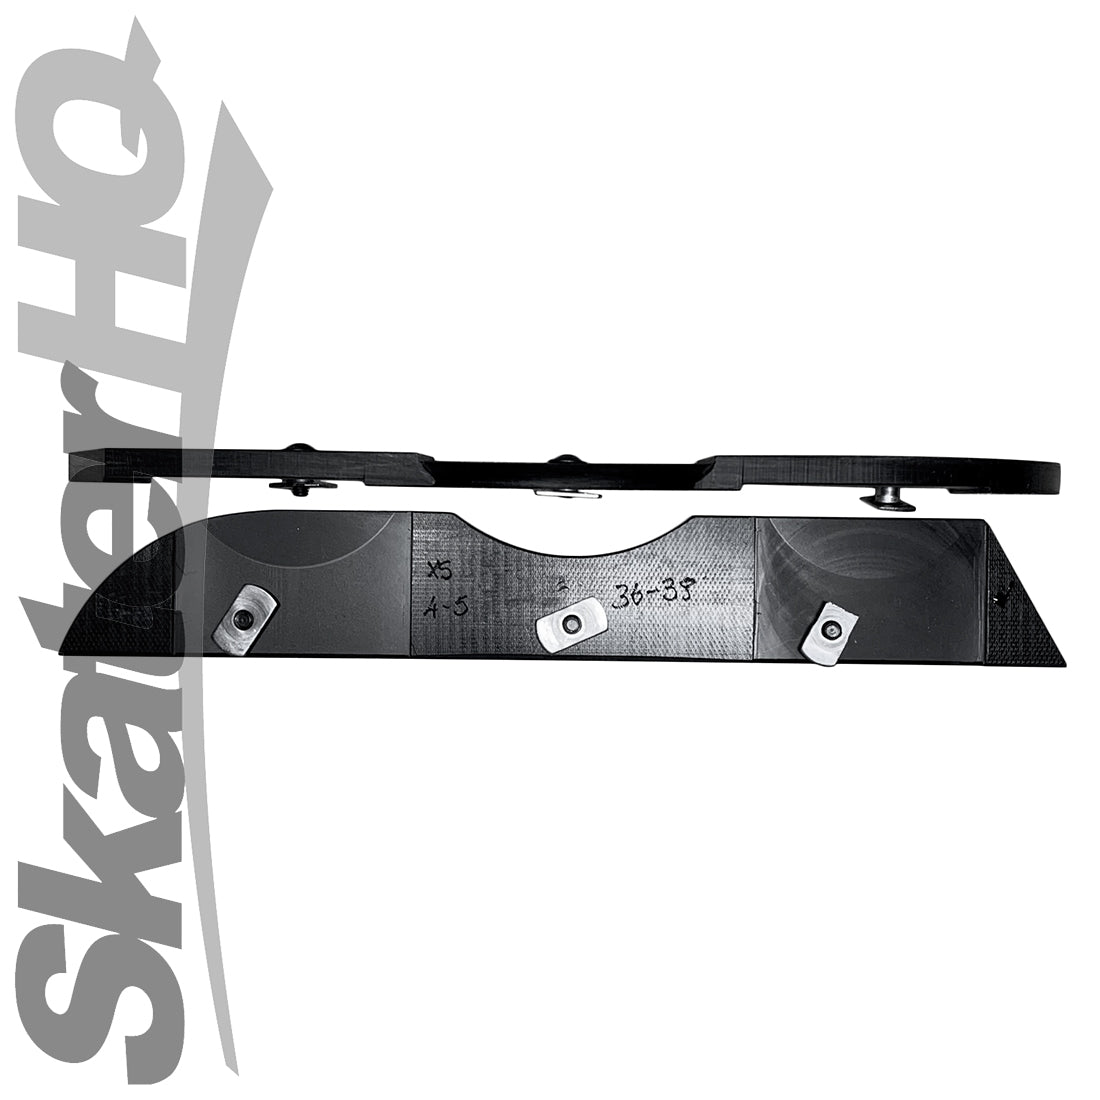 Sliqx Aeon Soul Plate Sliders - EU41-42 - Black Inline Hardware and Parts